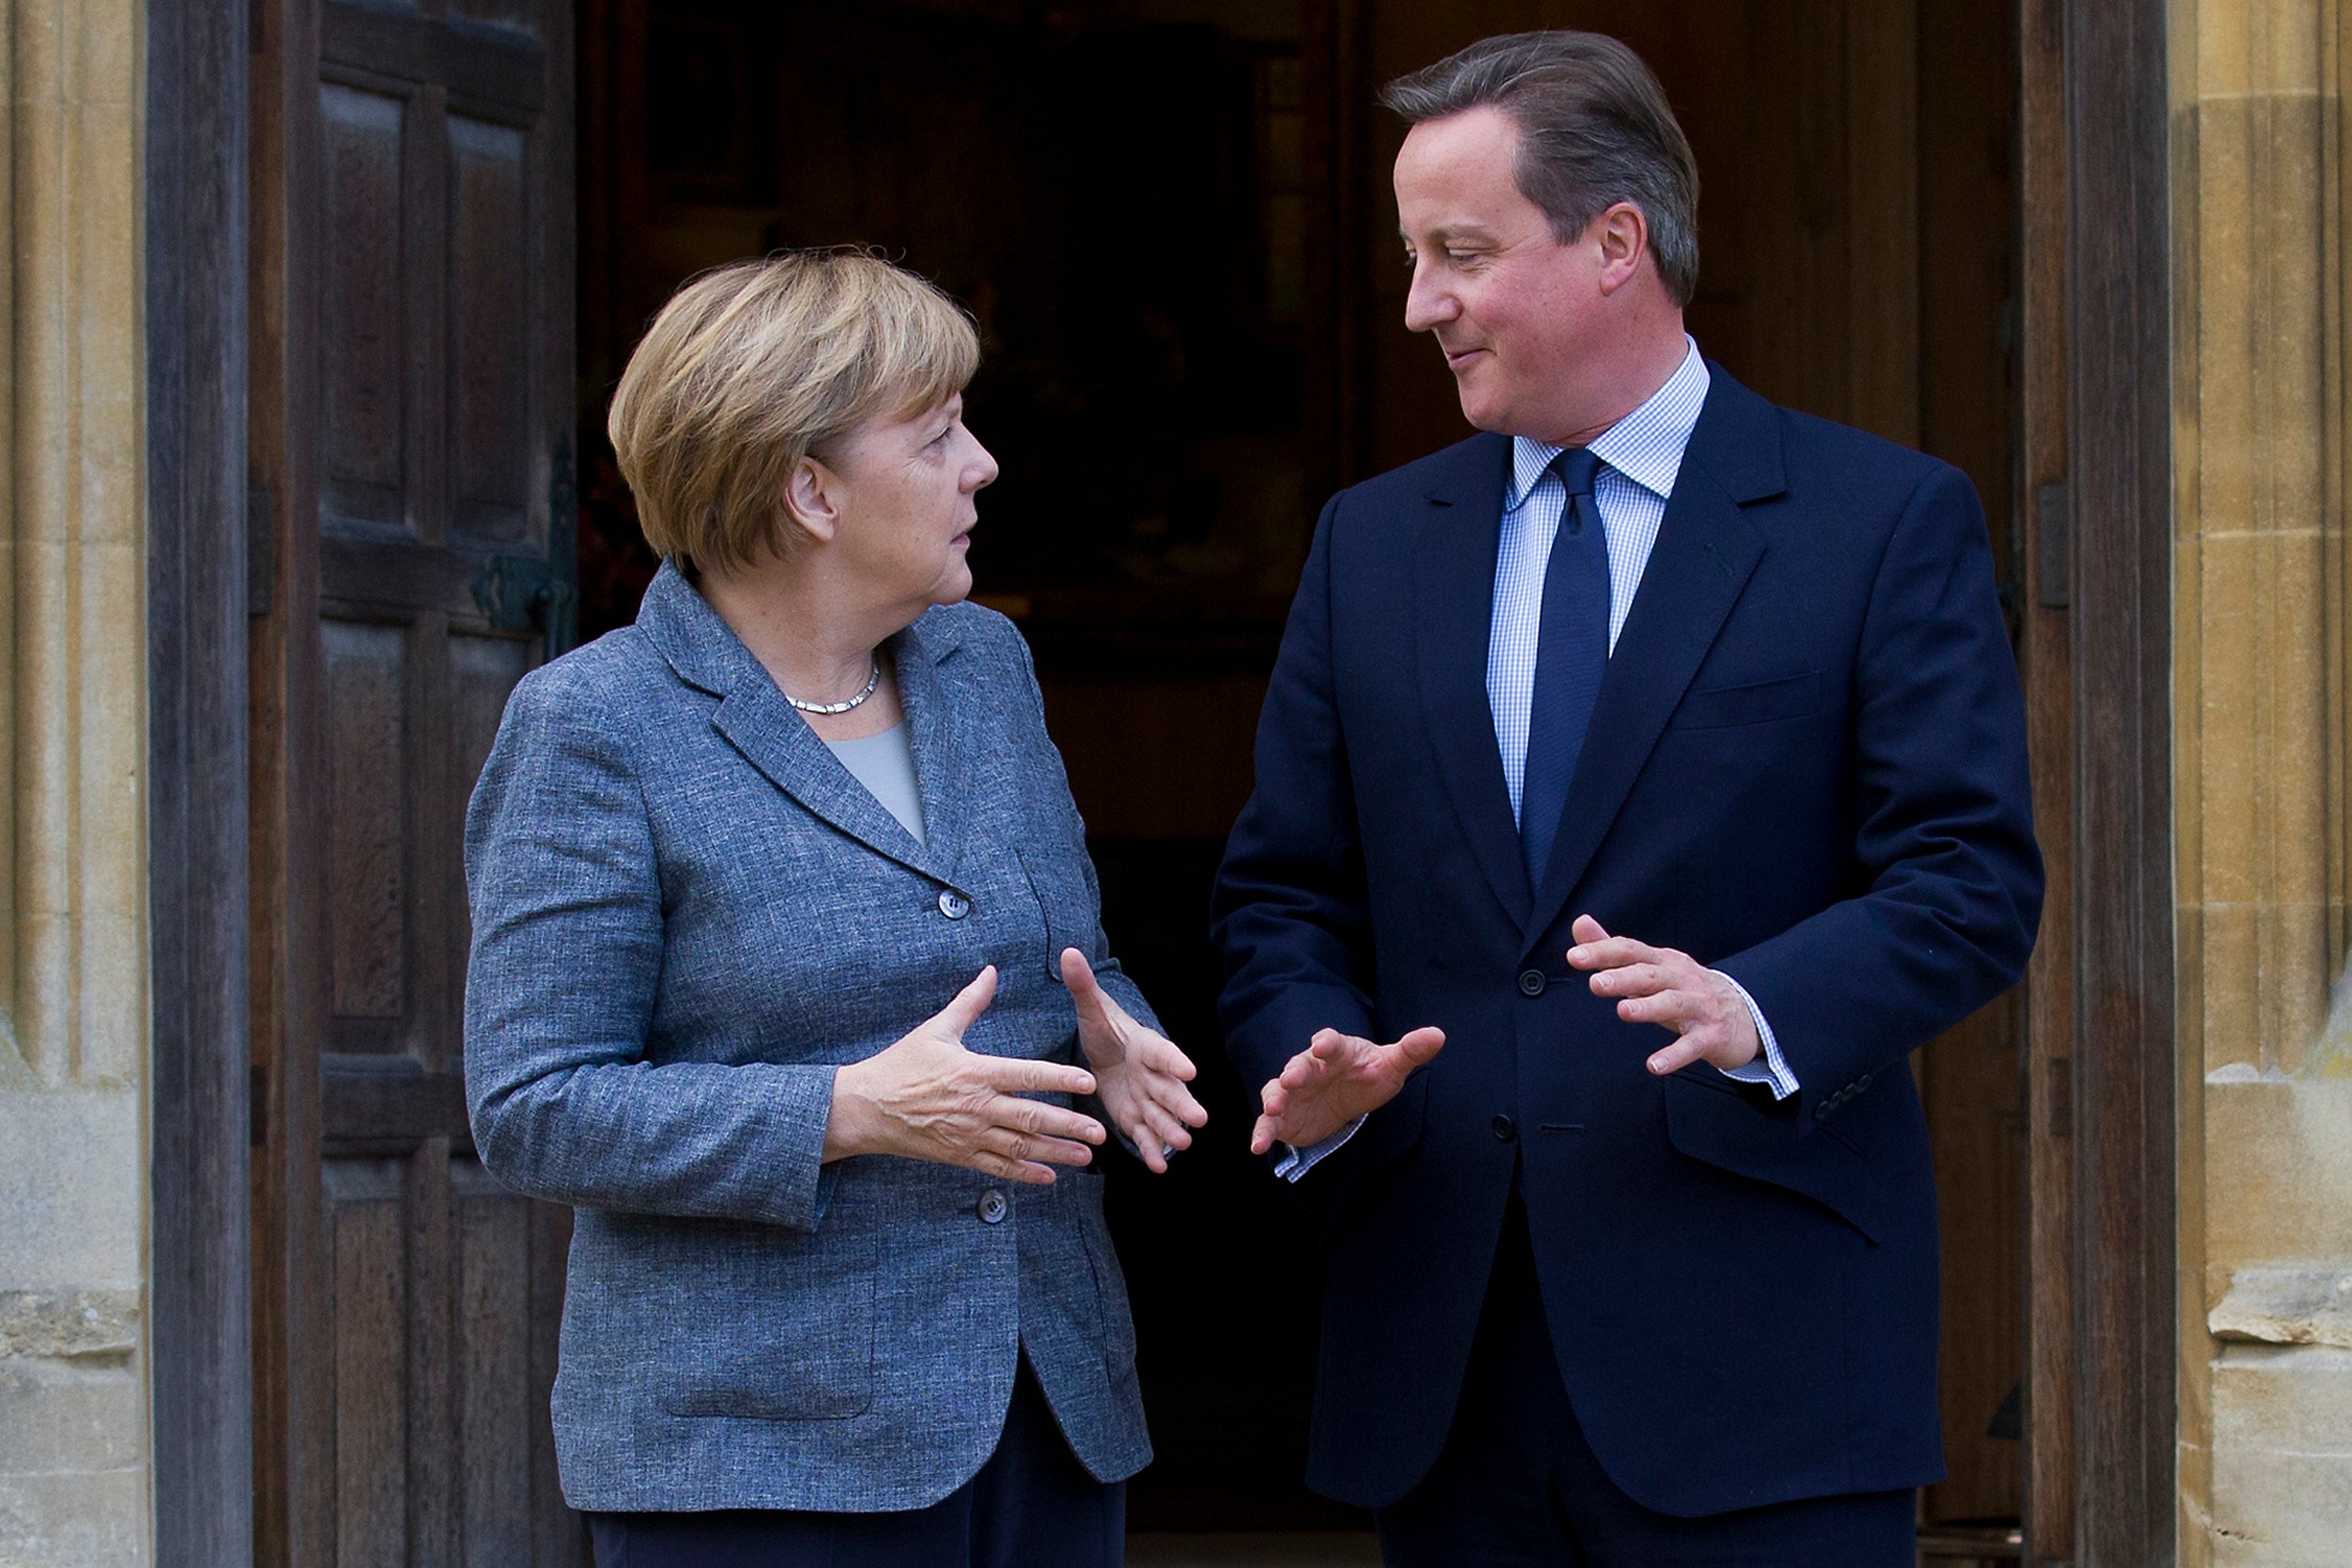 Angela Merkel said there were 'no surprises' in David Cameron's list of demands